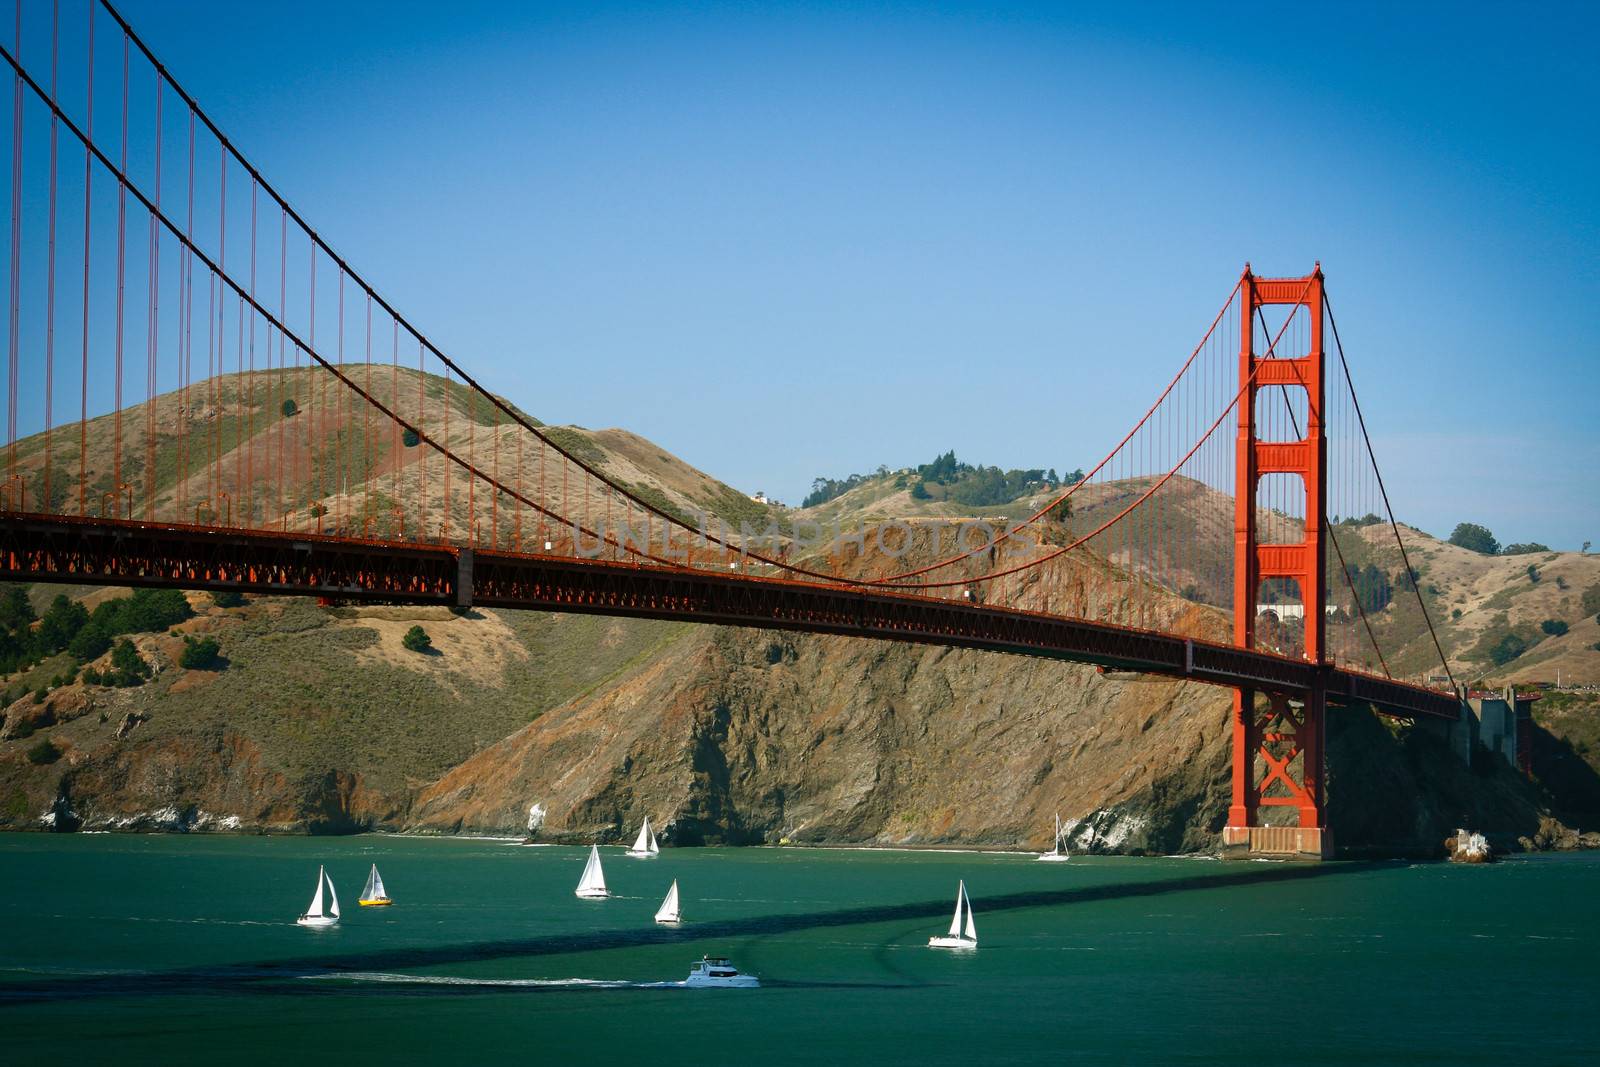 Golden Gate Bridge with mountain range in the background, San Francisco Bay, San Francisco, California, USA